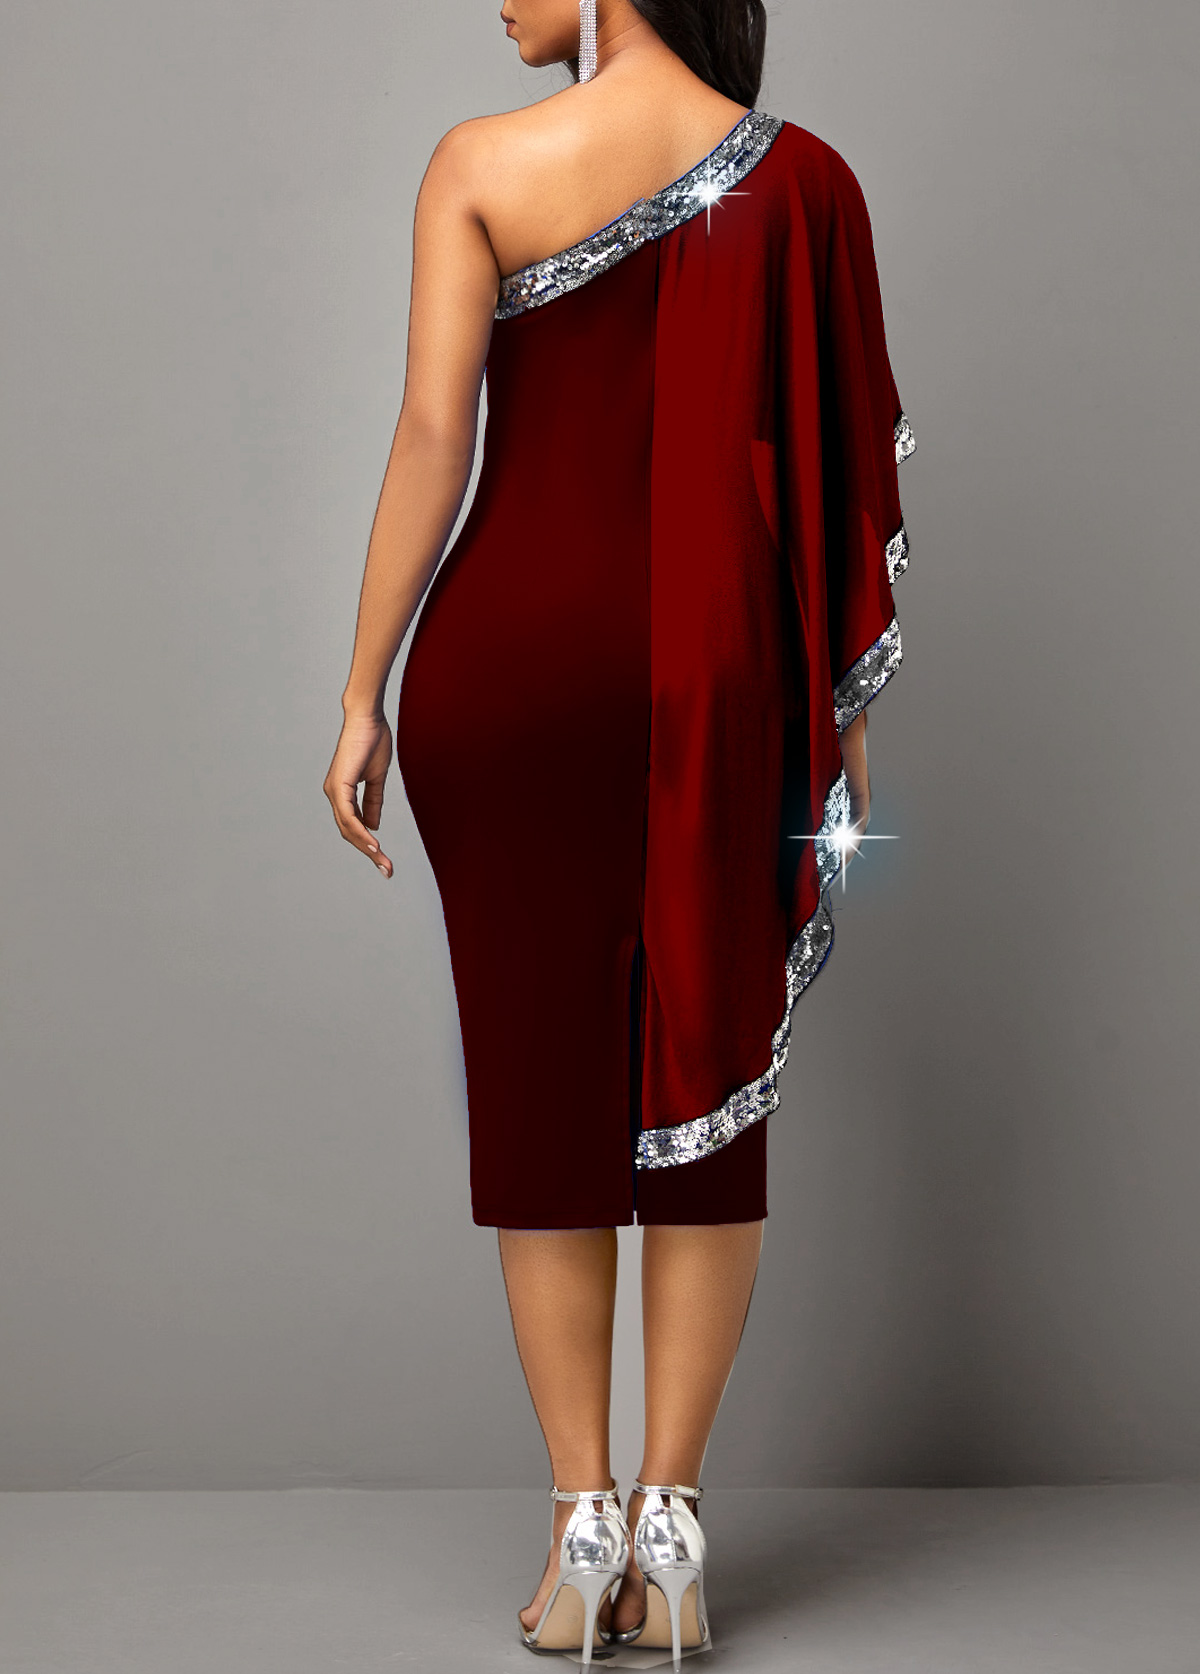 Glitter Fabric Stitching Skew Neck Wine Red Dress